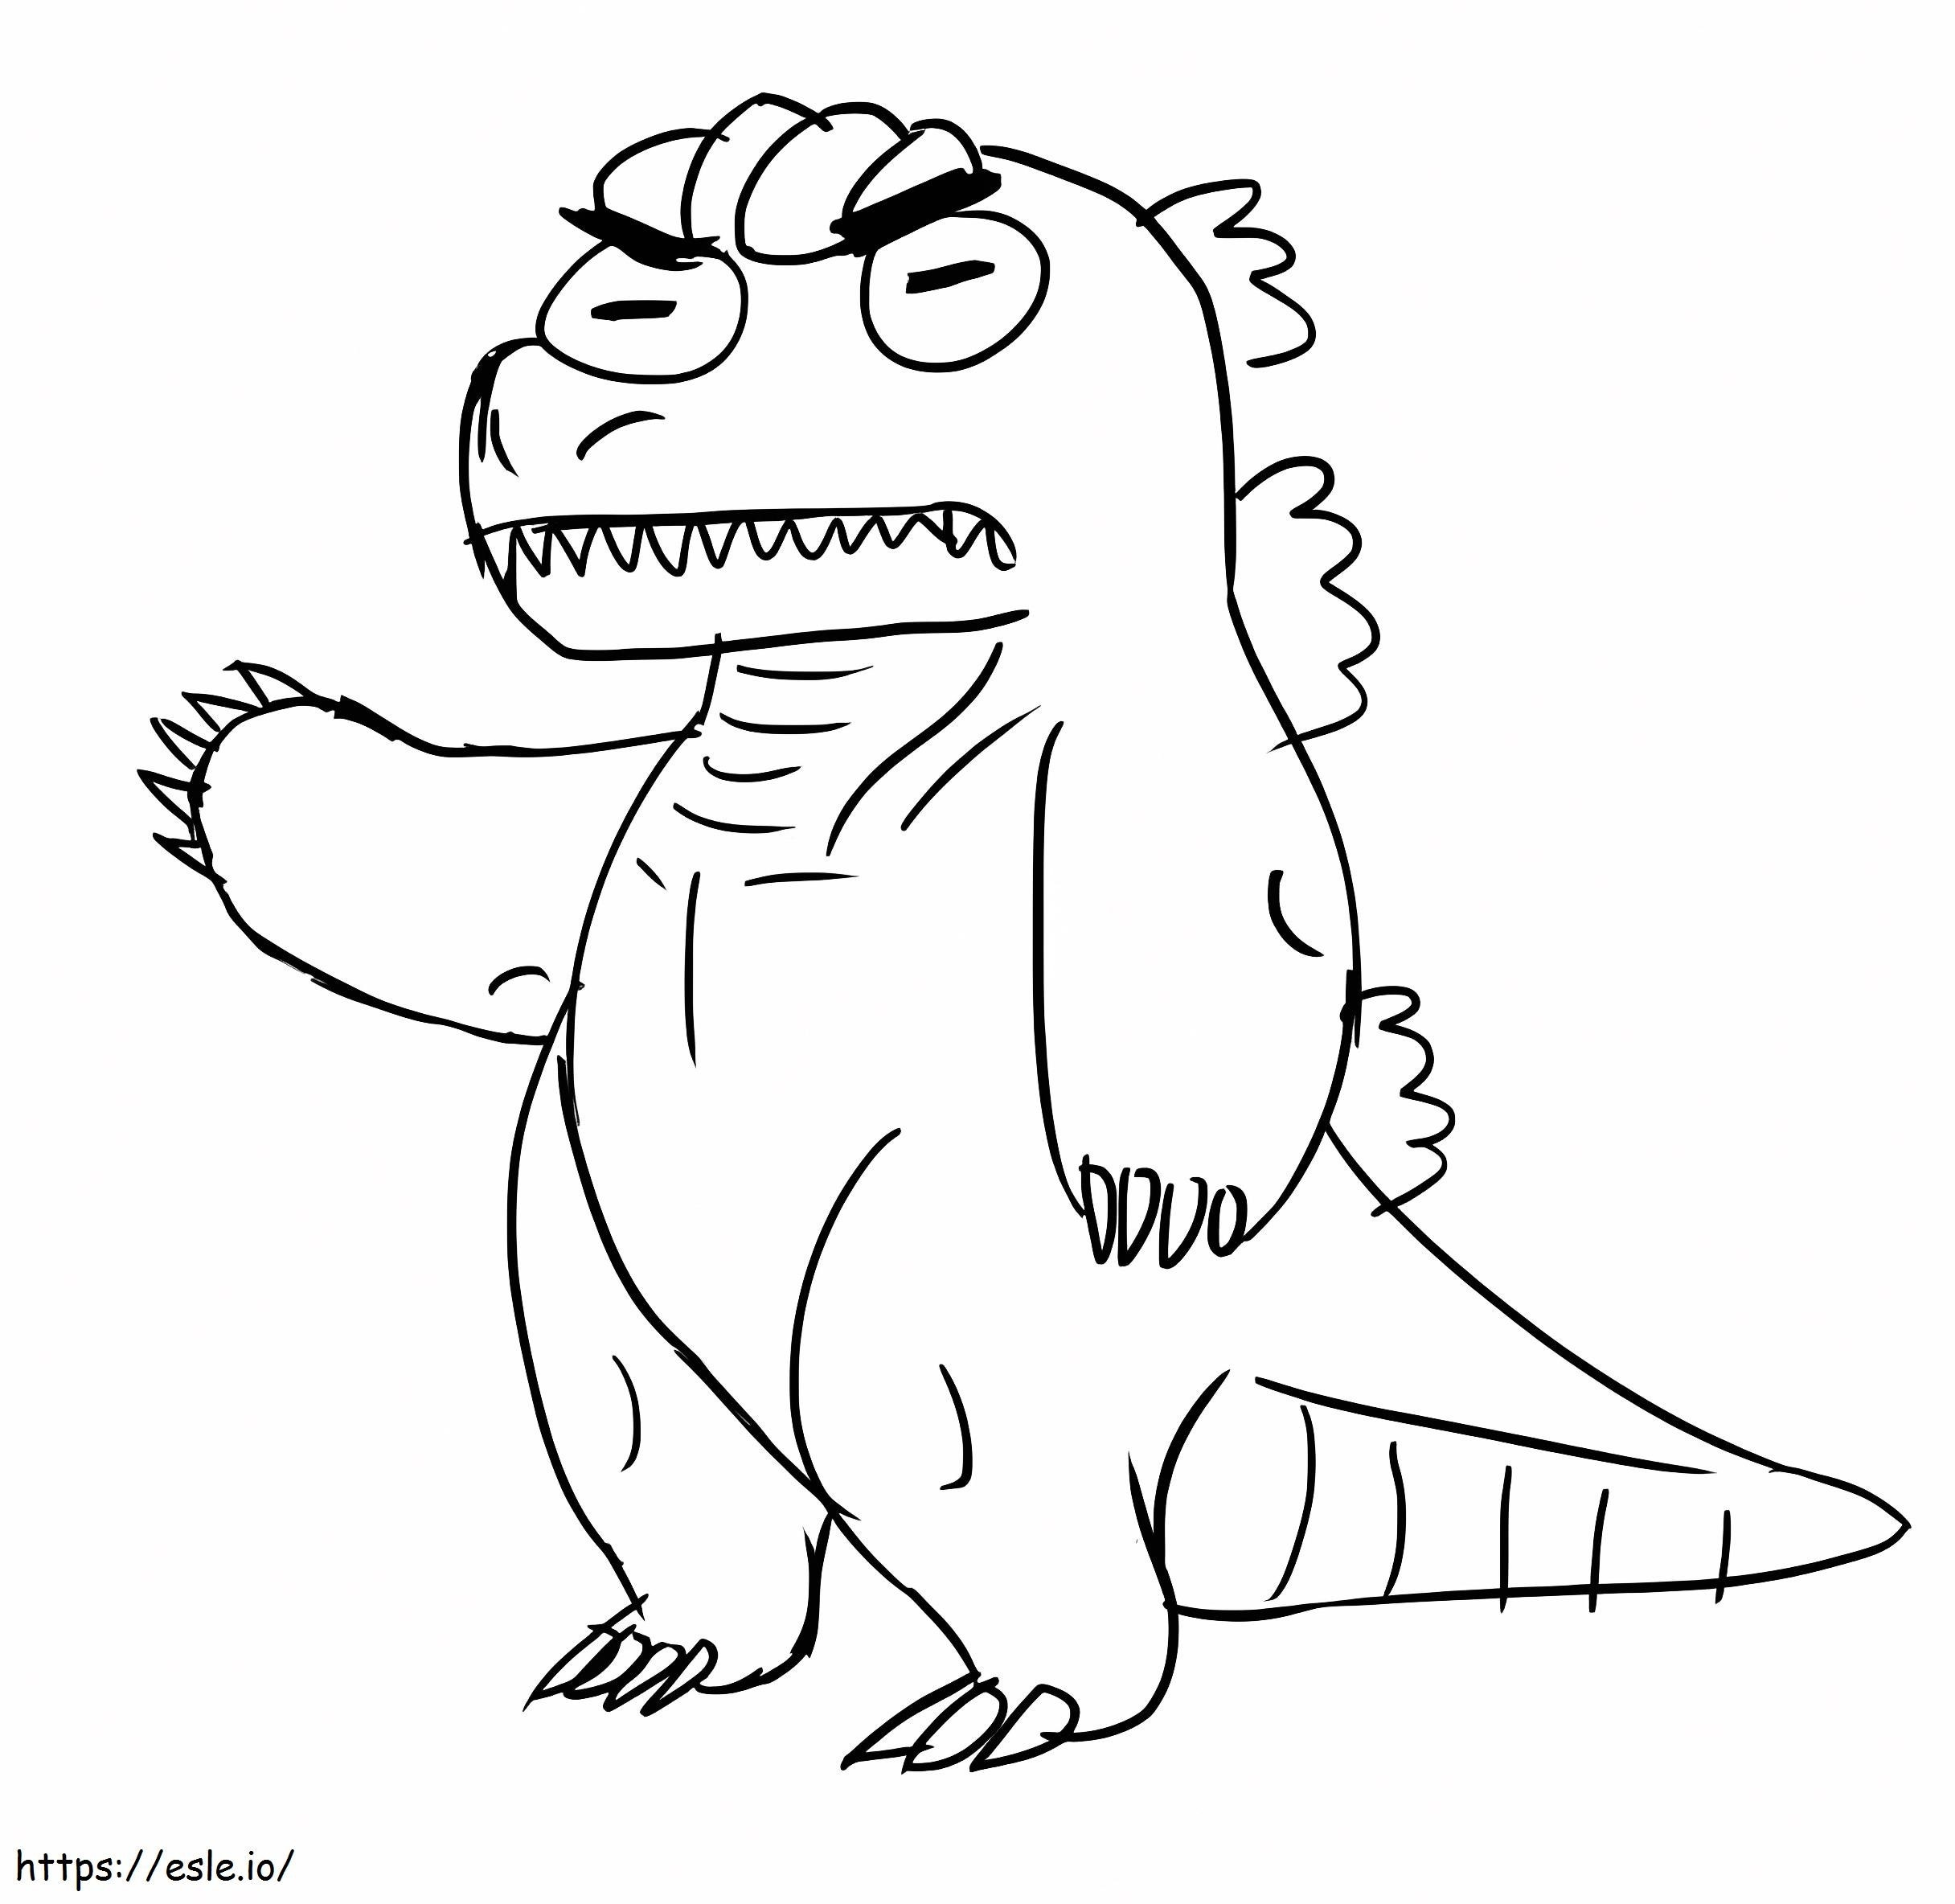 Adorable Godzilla coloring page